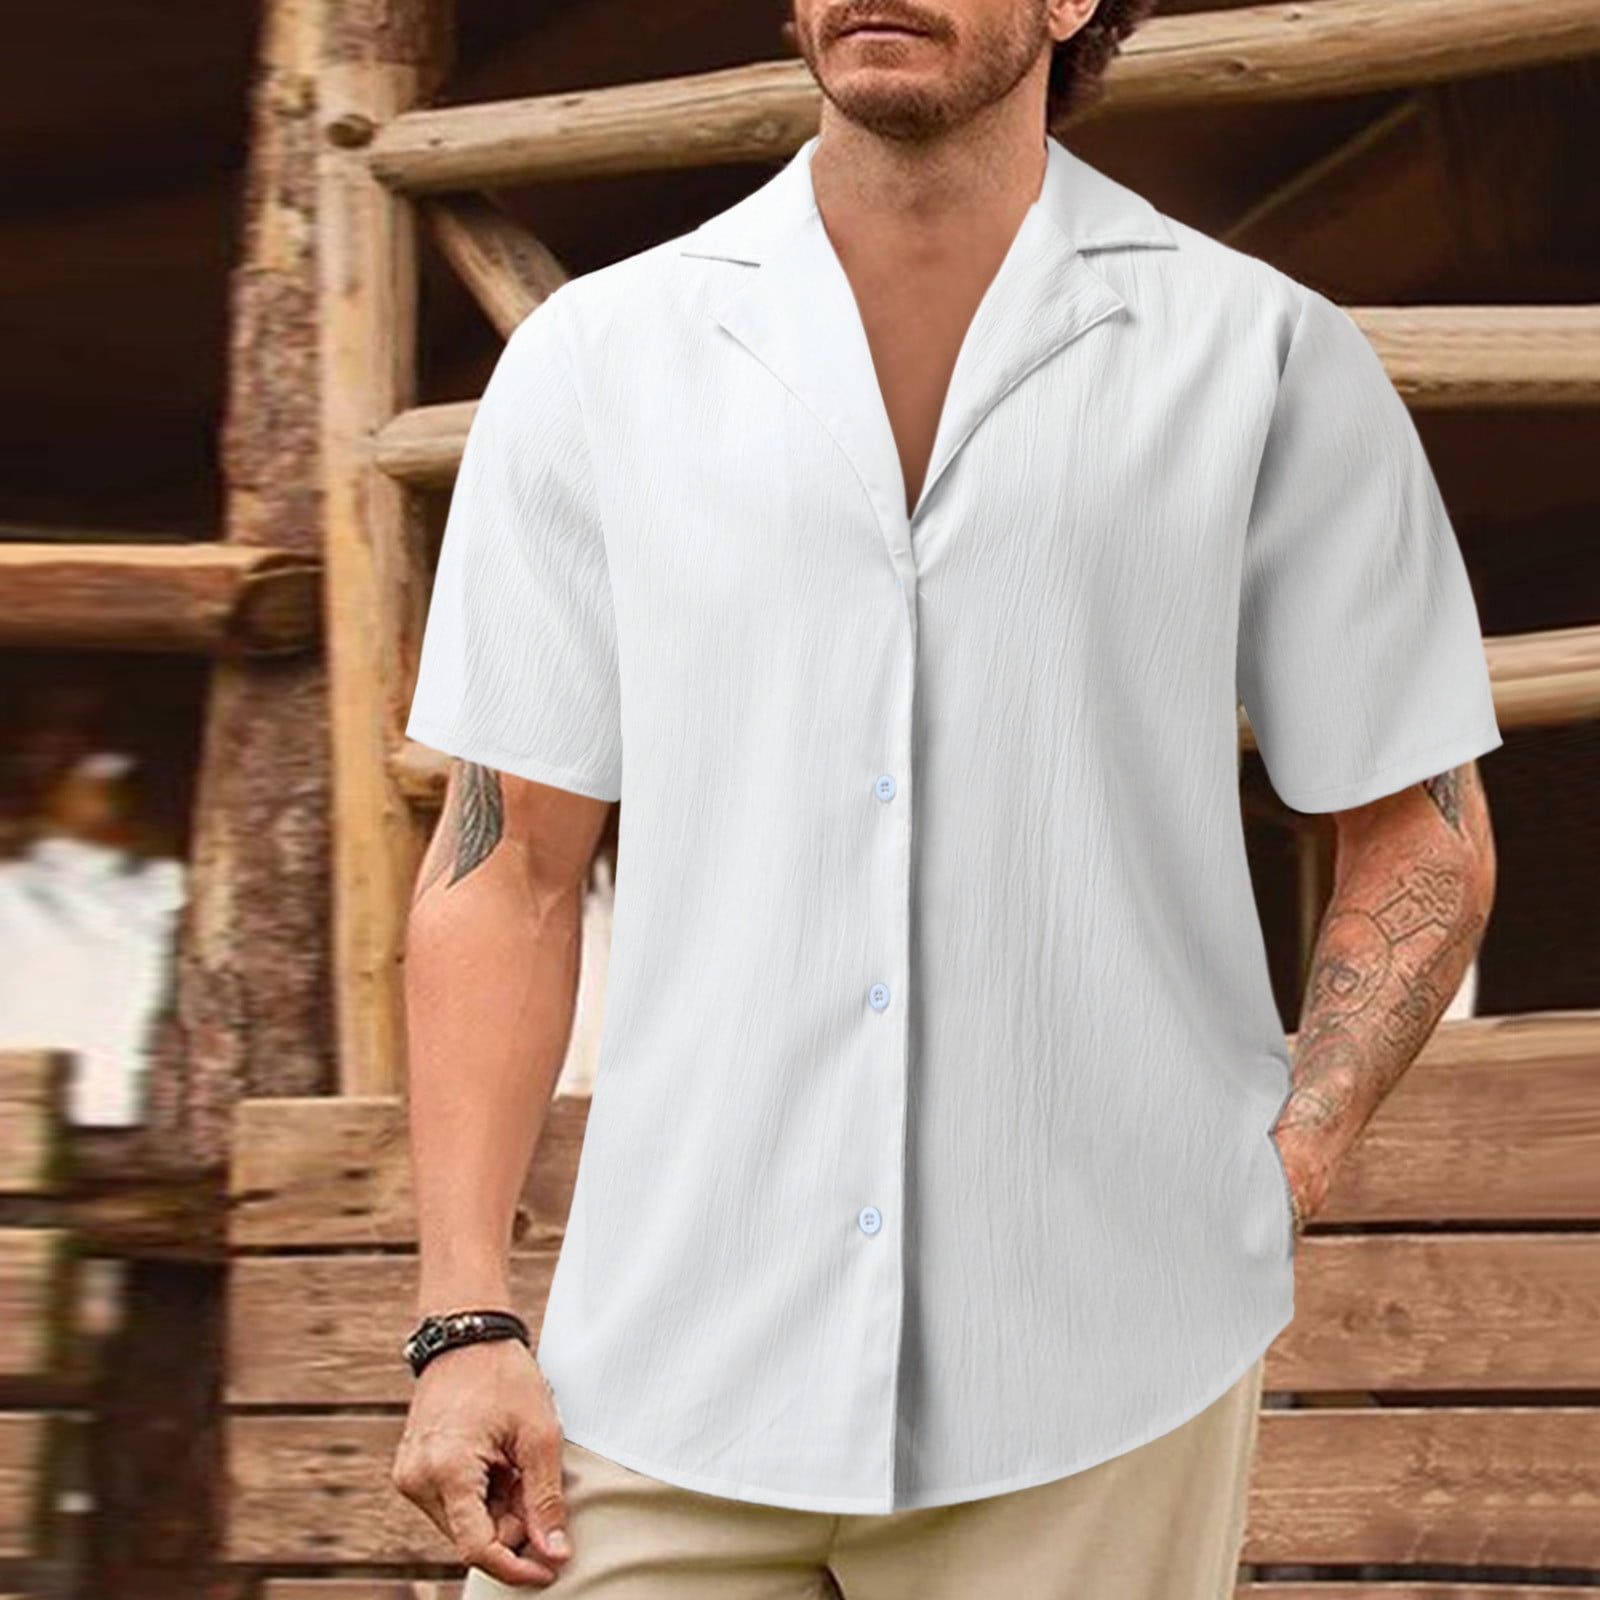 mens white short sleeve dress shirt